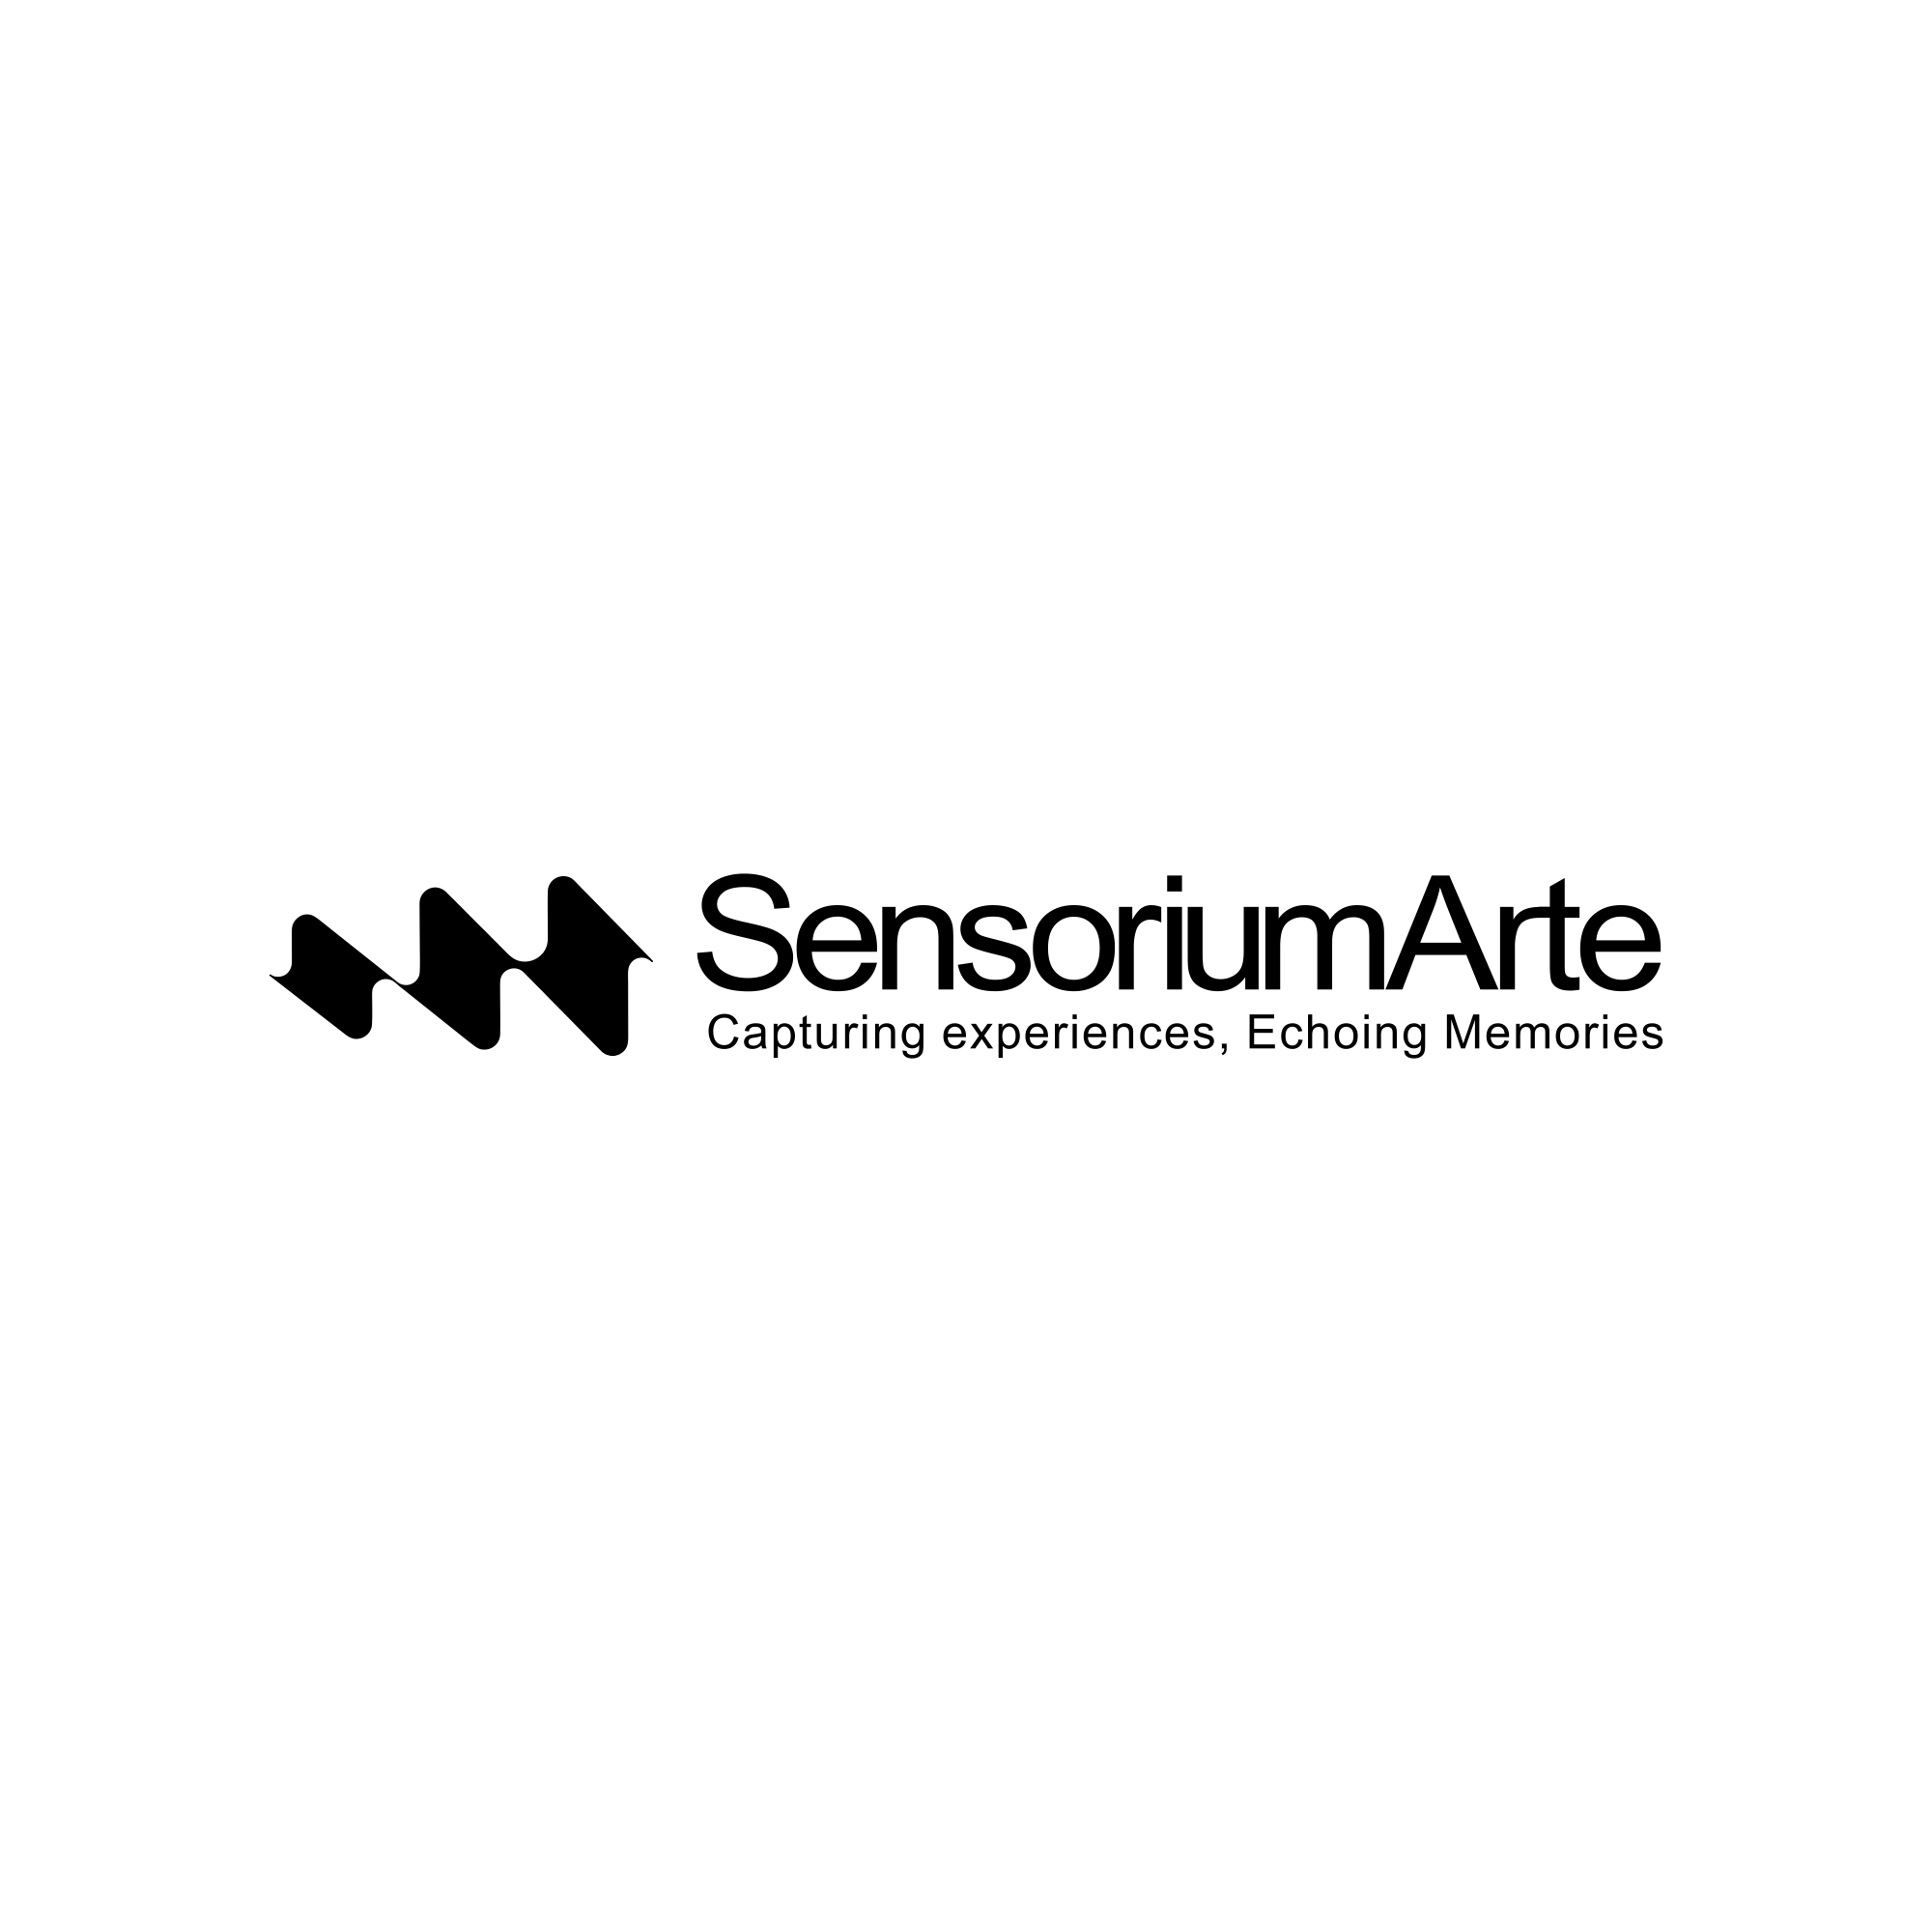 The journey begins: Building one of the most unique startups you’ve seen; SensoriumArte